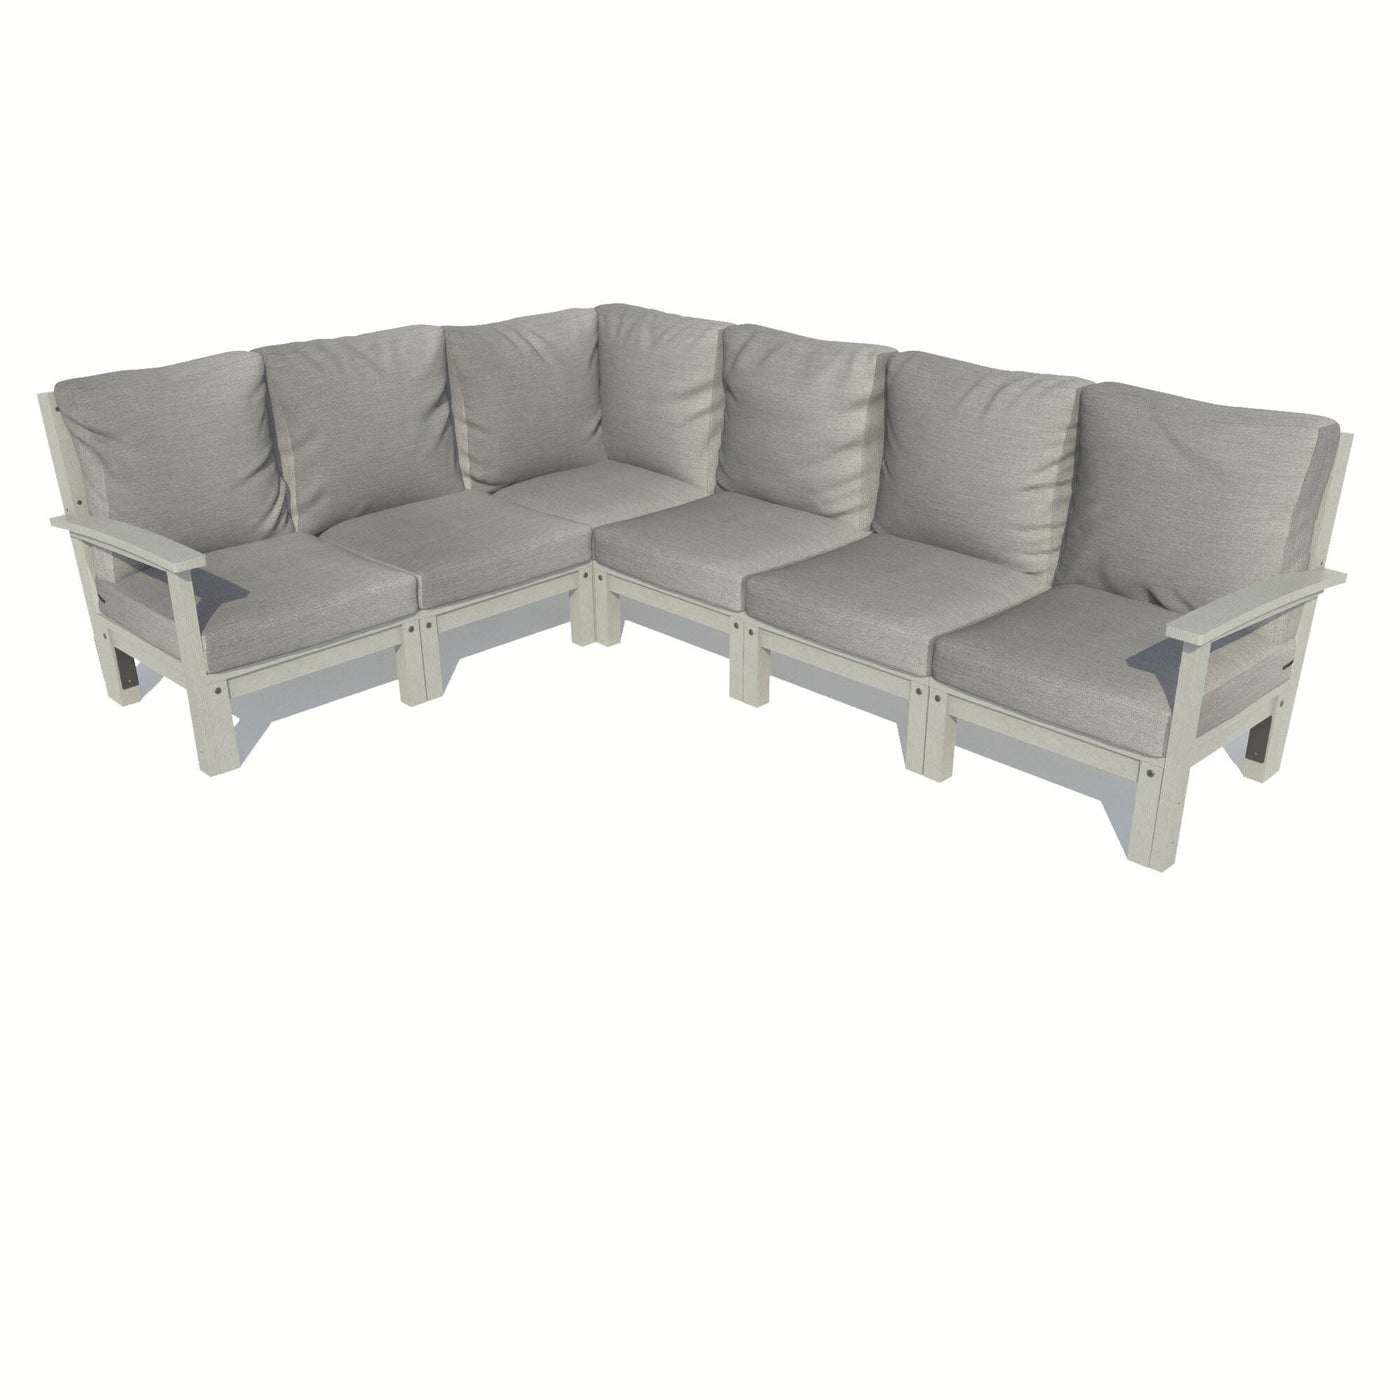 Bespoke Deep Seating: 6 Piece Sectional Sofa Set Deep Seating Highwood USA Stone Gray Coastal Teak 